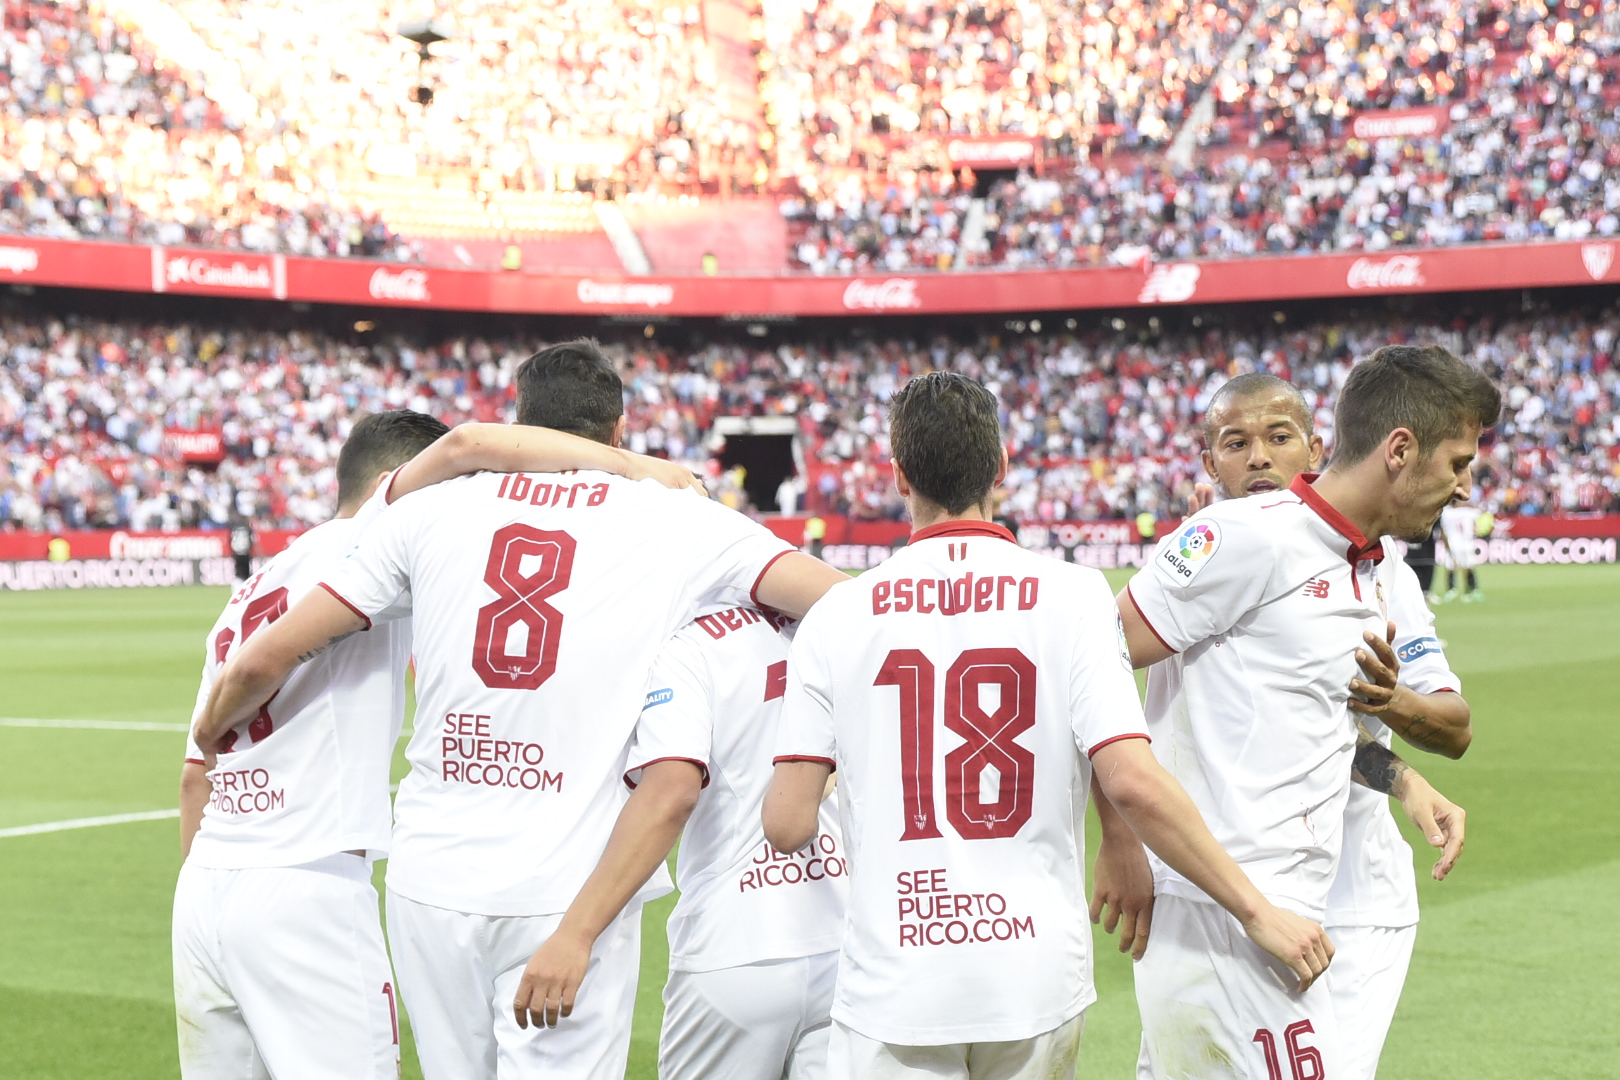 Sevilla celebrate a goal in the 16/17 season